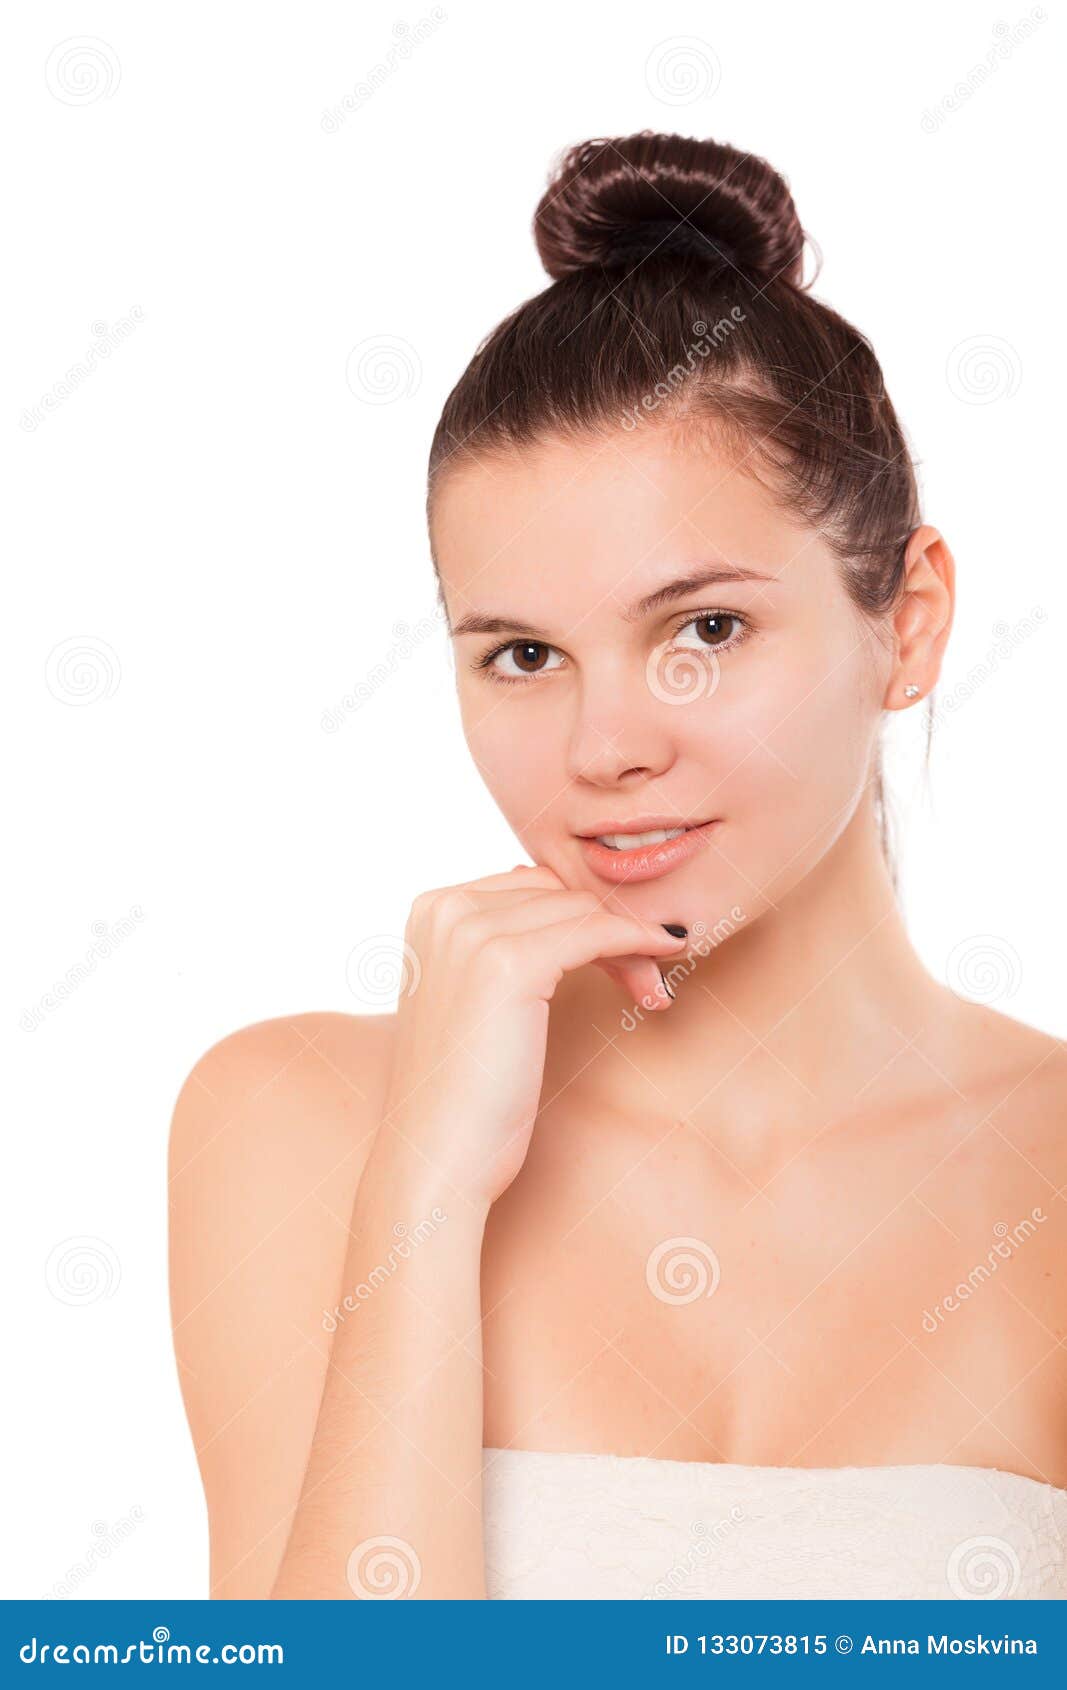 Ohio facial cosmetology and skin care - Hot Nude Photos